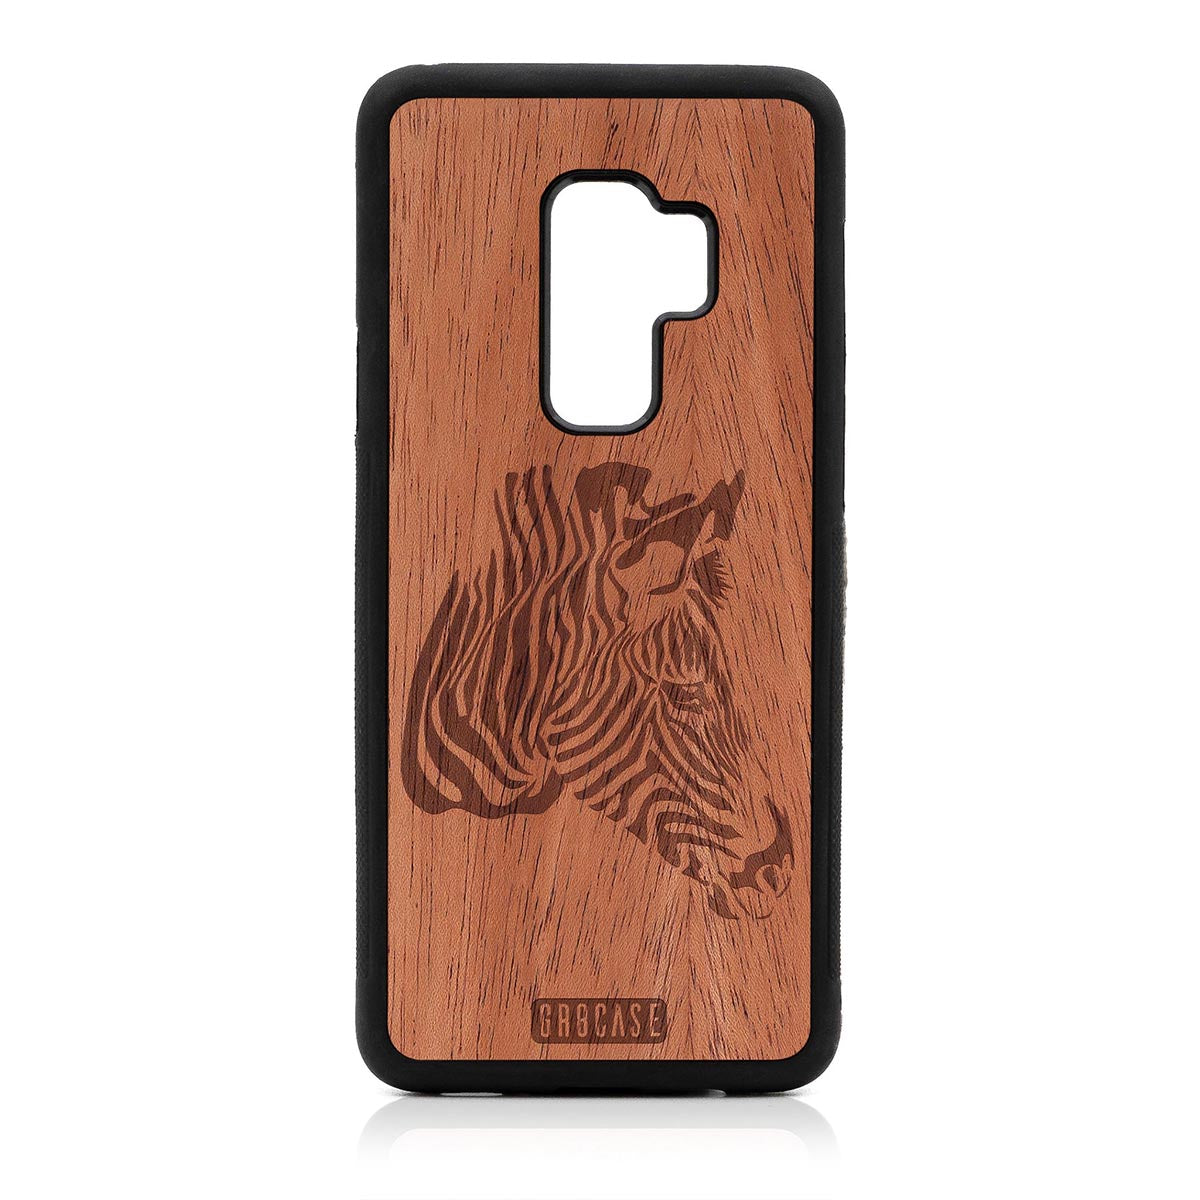 Zebra Design Wood Case For Samsung Galaxy S9 Plus